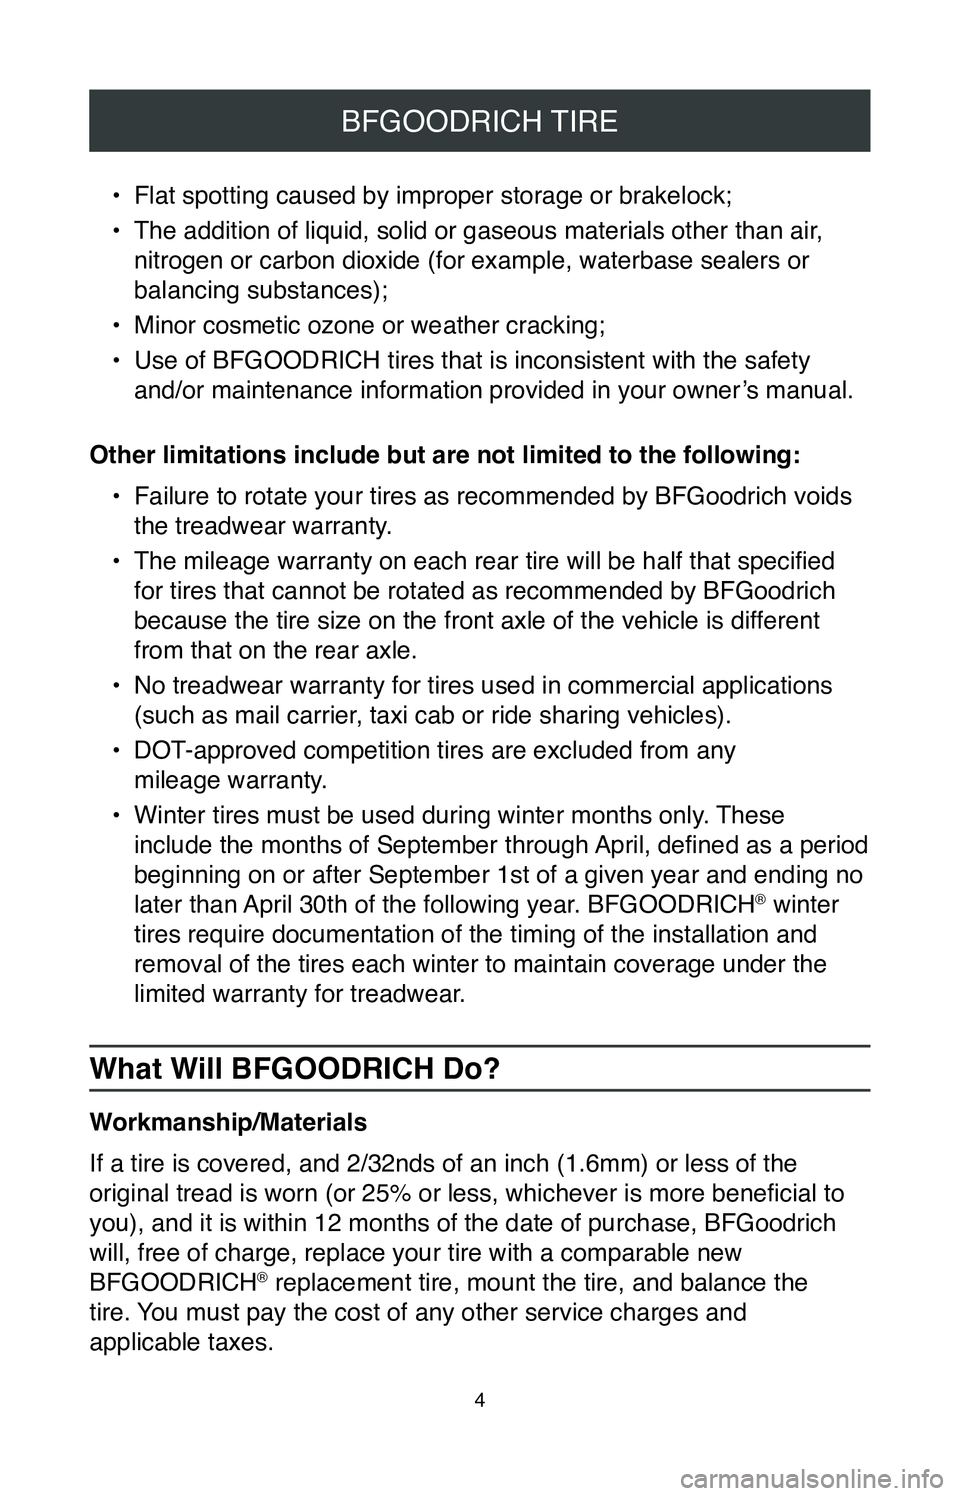 TOYOTA TACOMA 2020  Warranties & Maintenance Guides (in English) 4
BFGOODRICH TIRE
